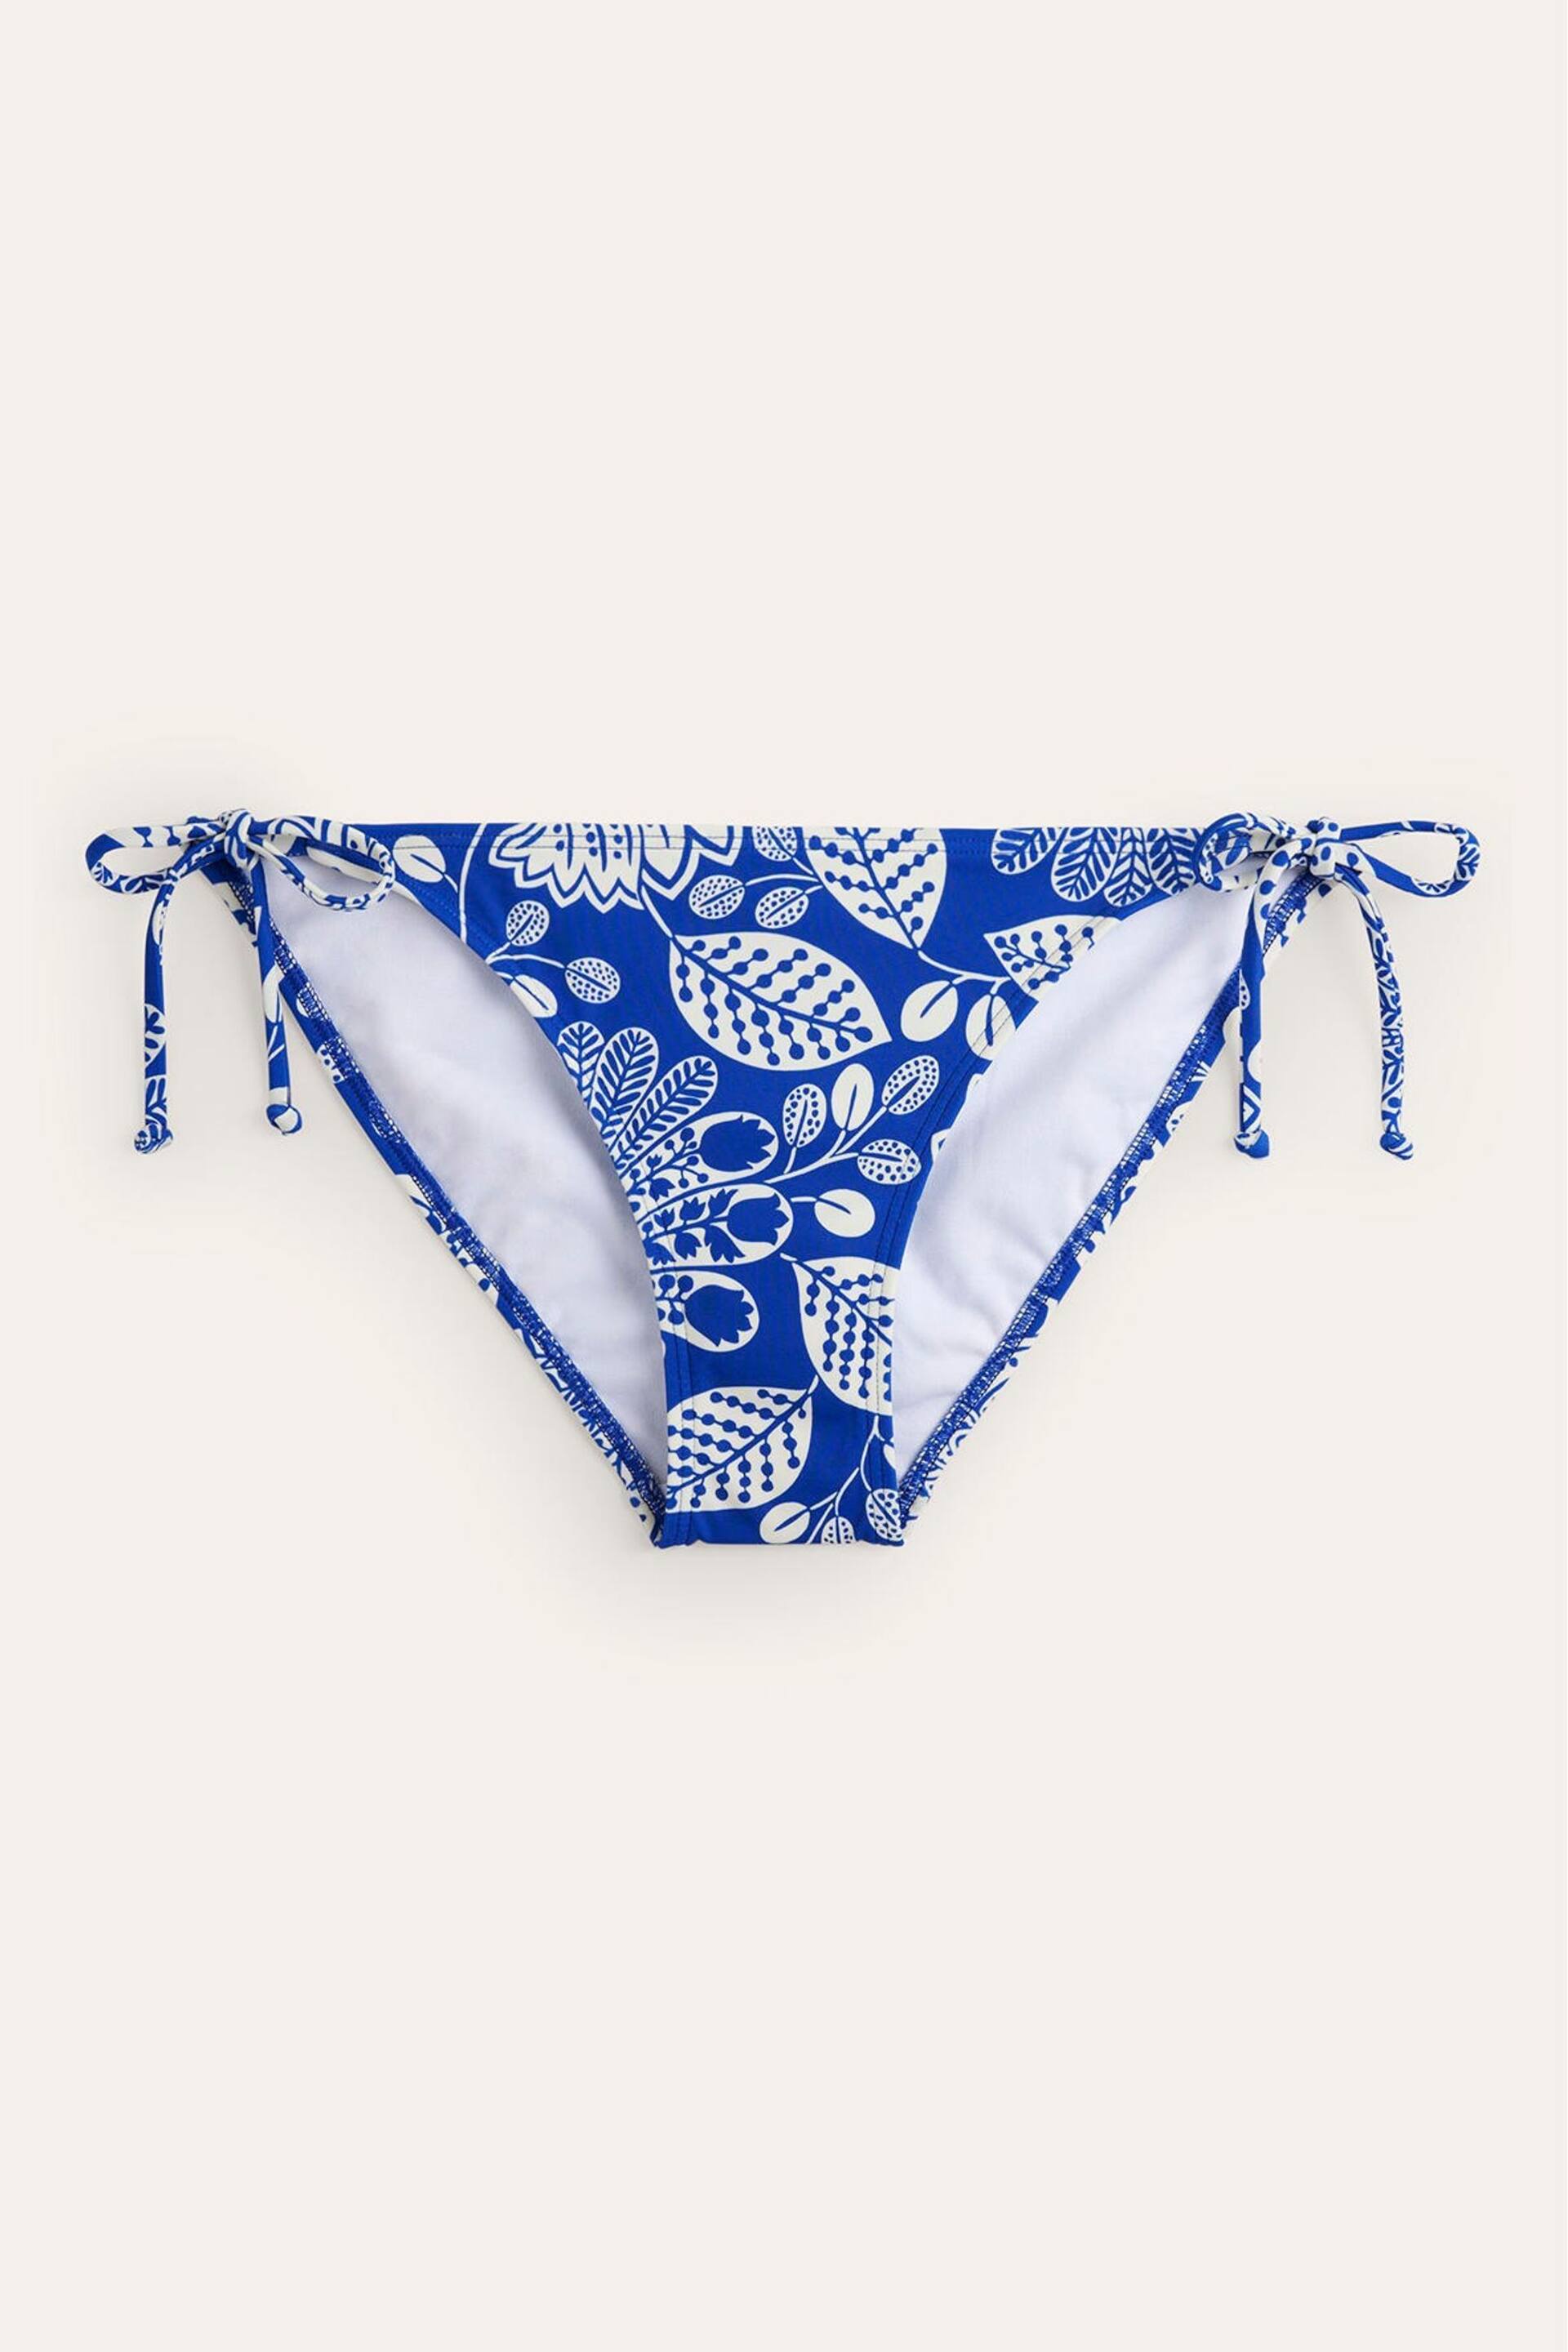 Boden Blue Symi String Bikini Bottoms - Image 6 of 7